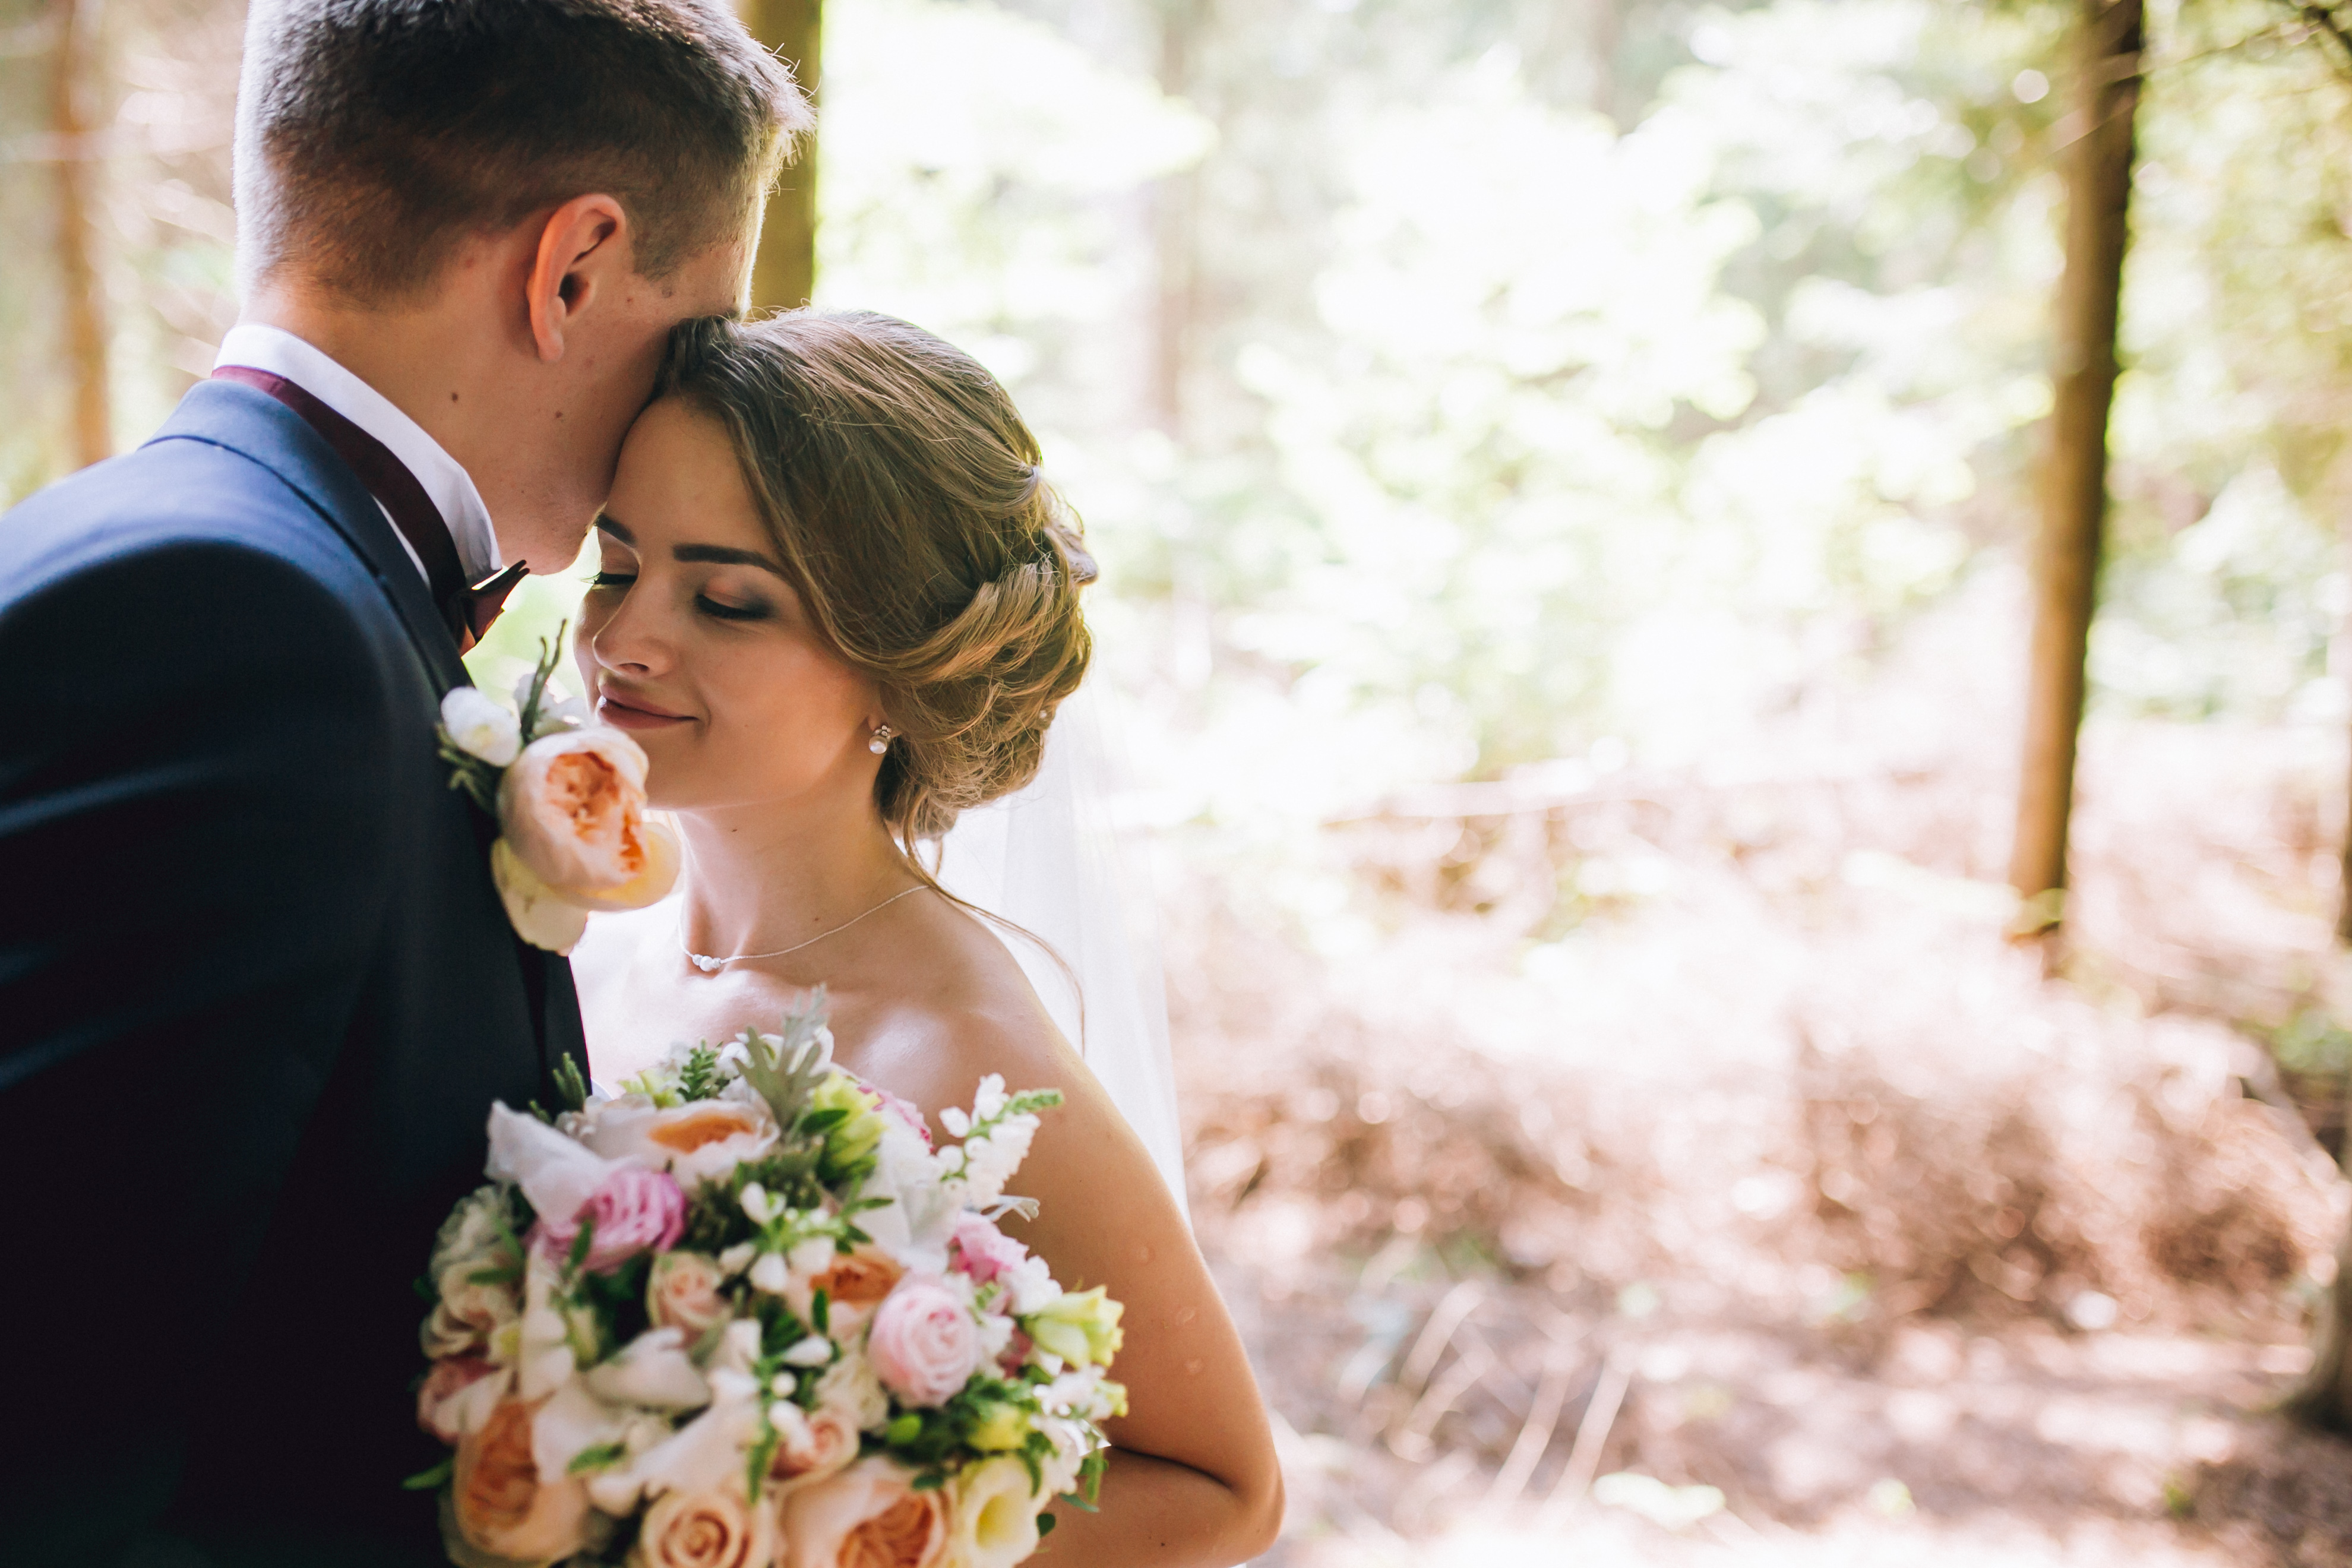 Un couple de jeunes mariés | Source : Shutterstock